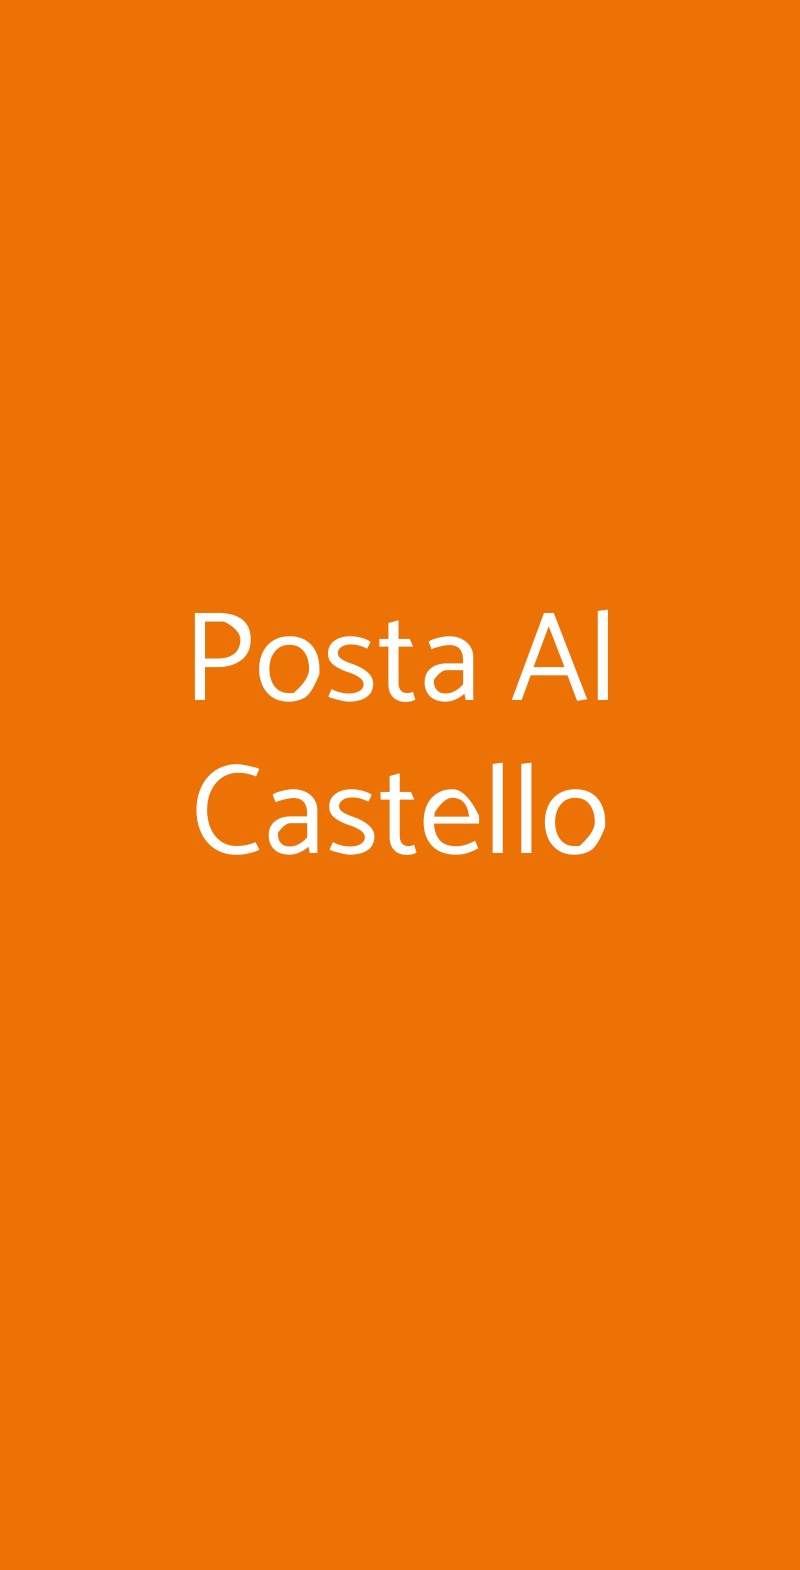 Posta Al Castello Gromo menù 1 pagina